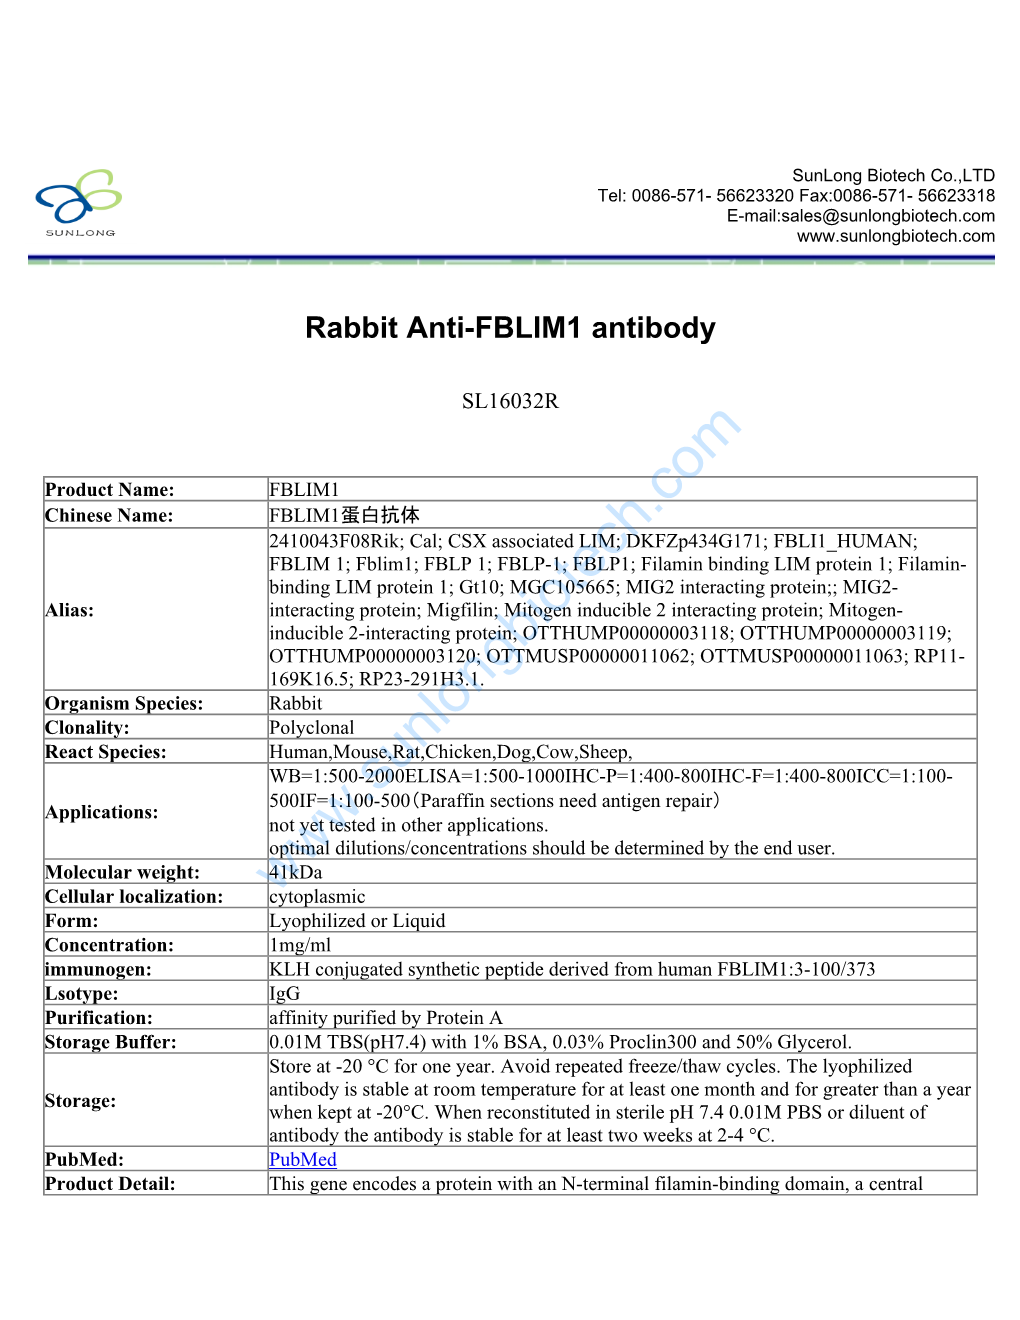 Rabbit Anti-FBLIM1 Antibody-SL16032R